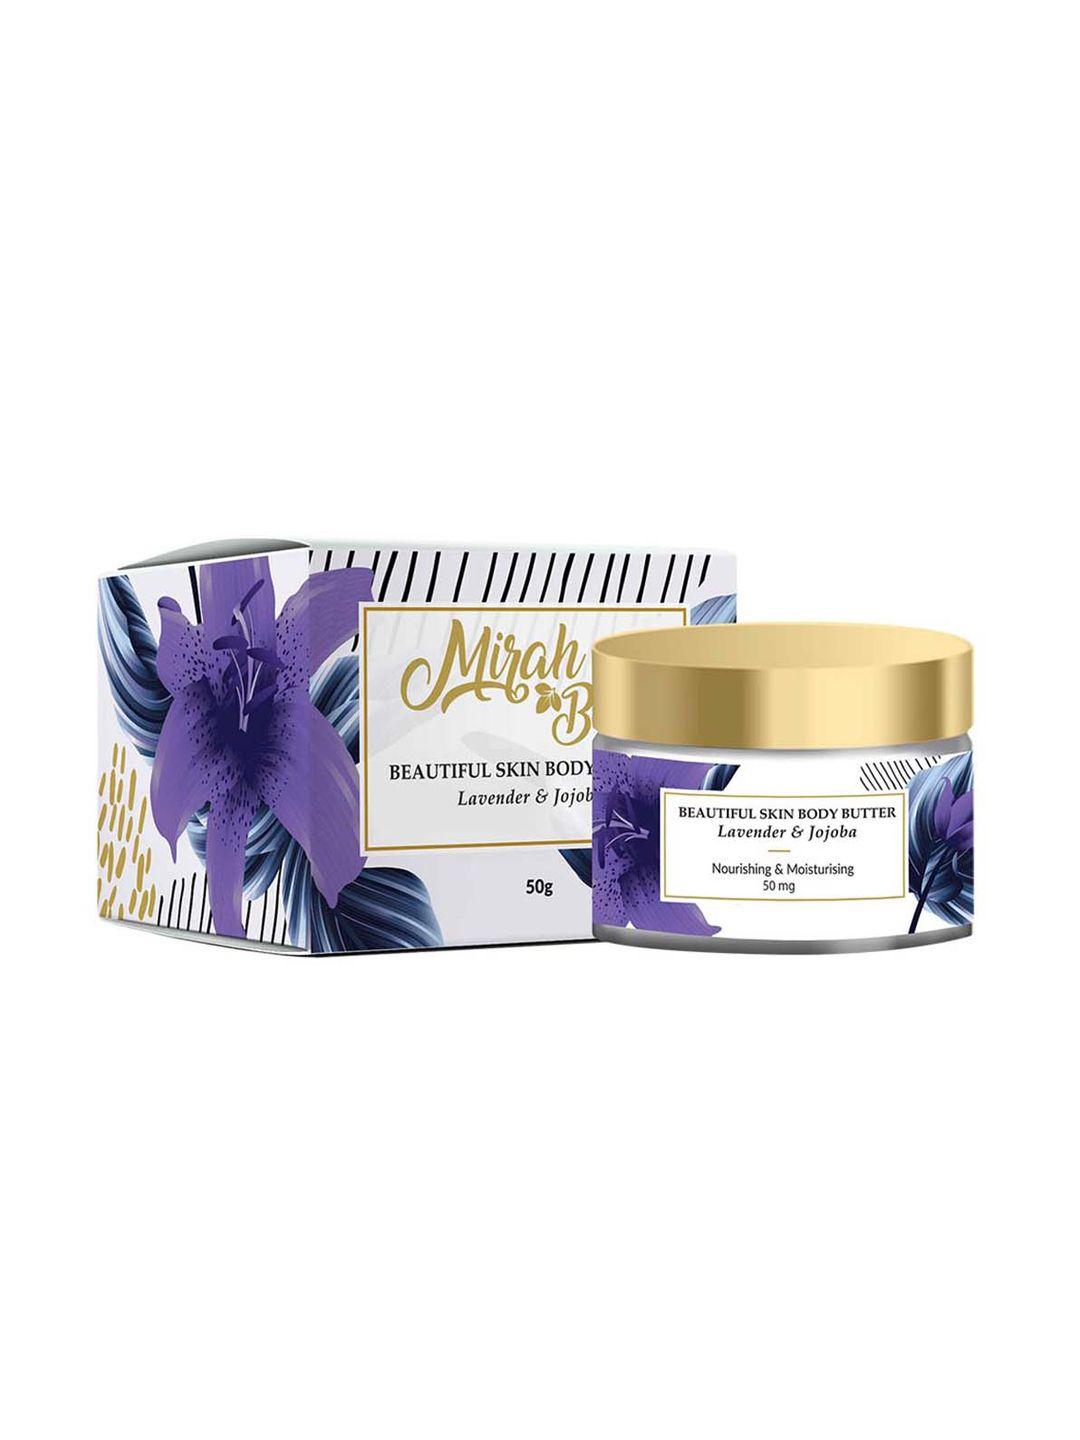 Mirah Belle Lavender & Jojoba Beautiful Skin Body Butter 50 gm